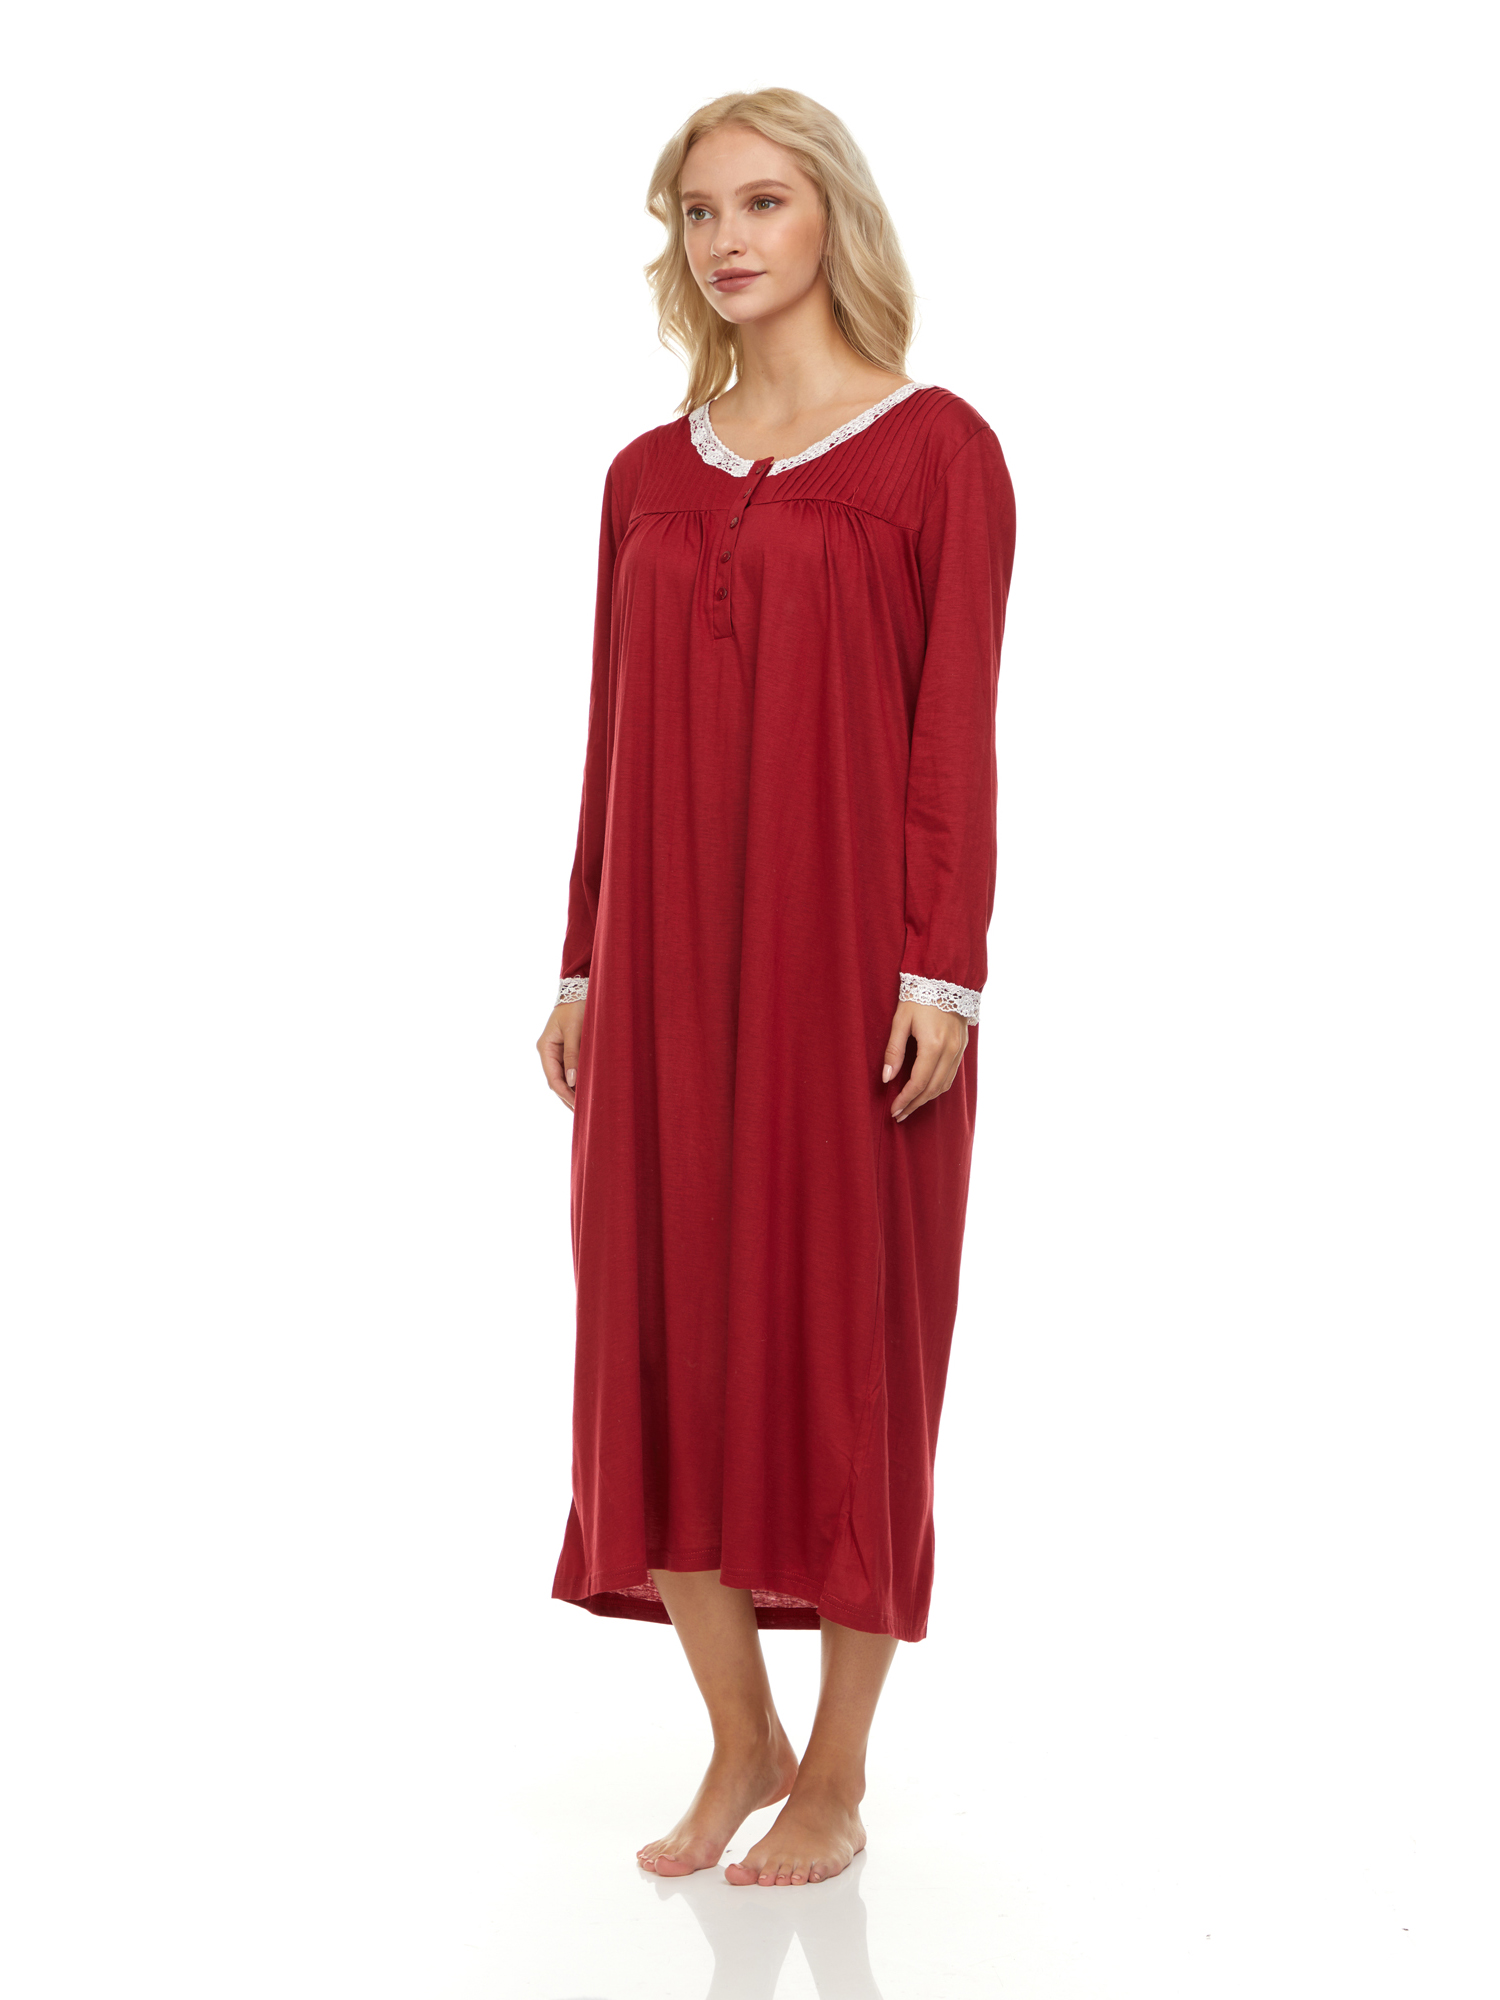 Lati Fashion 672 Women Long Sleeve Female Nightgown Sleep Dress Nightshirt